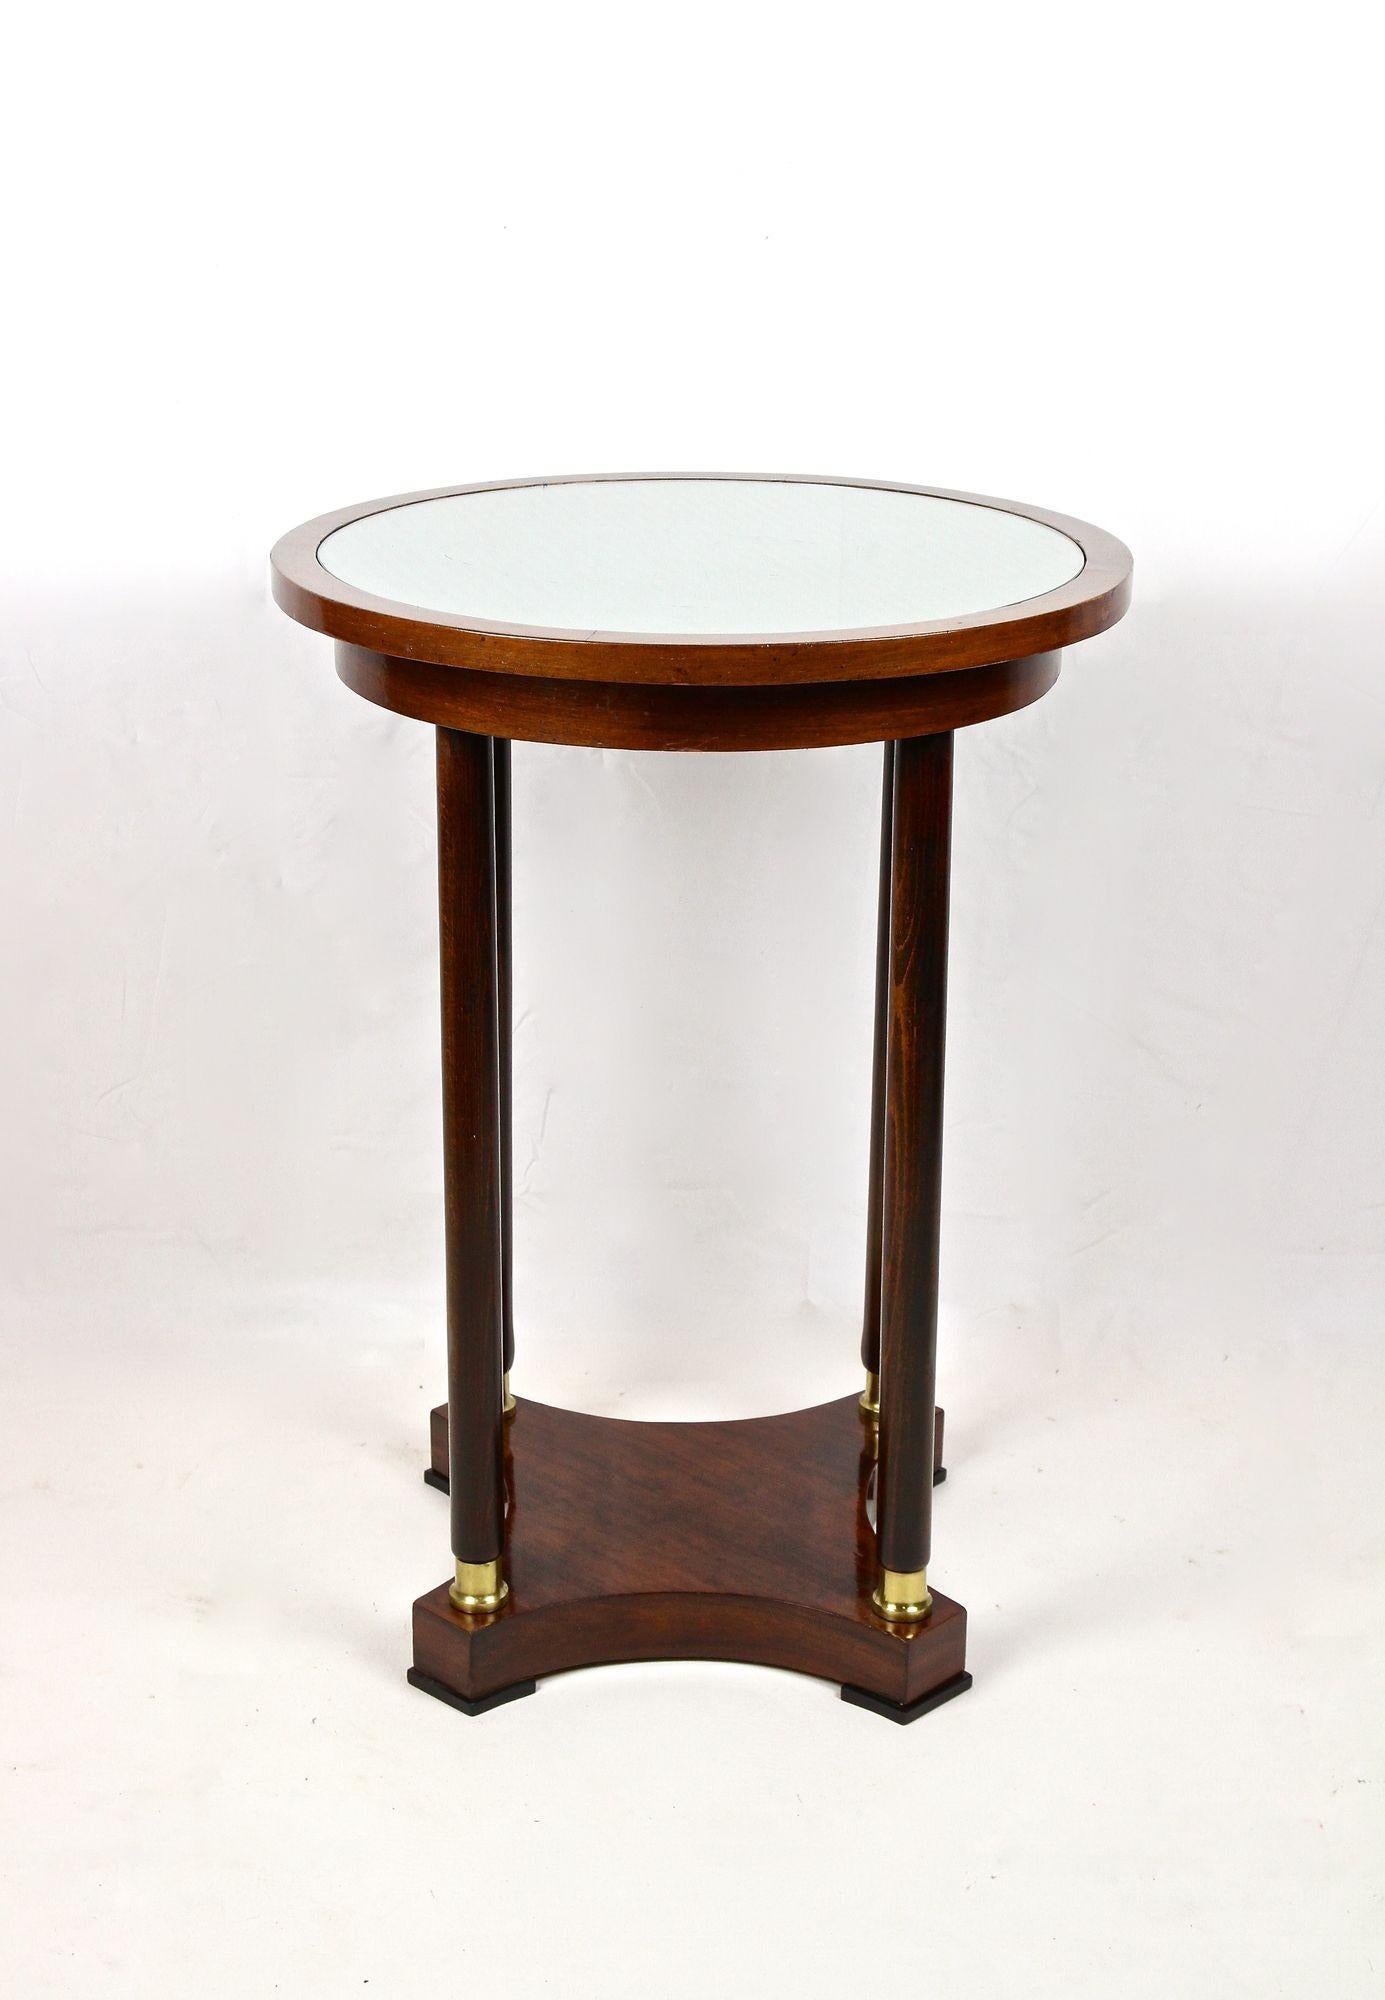 20th Century Art Nouveau Side Table/ Coffee Table, Austria ca. 1905 For Sale 6